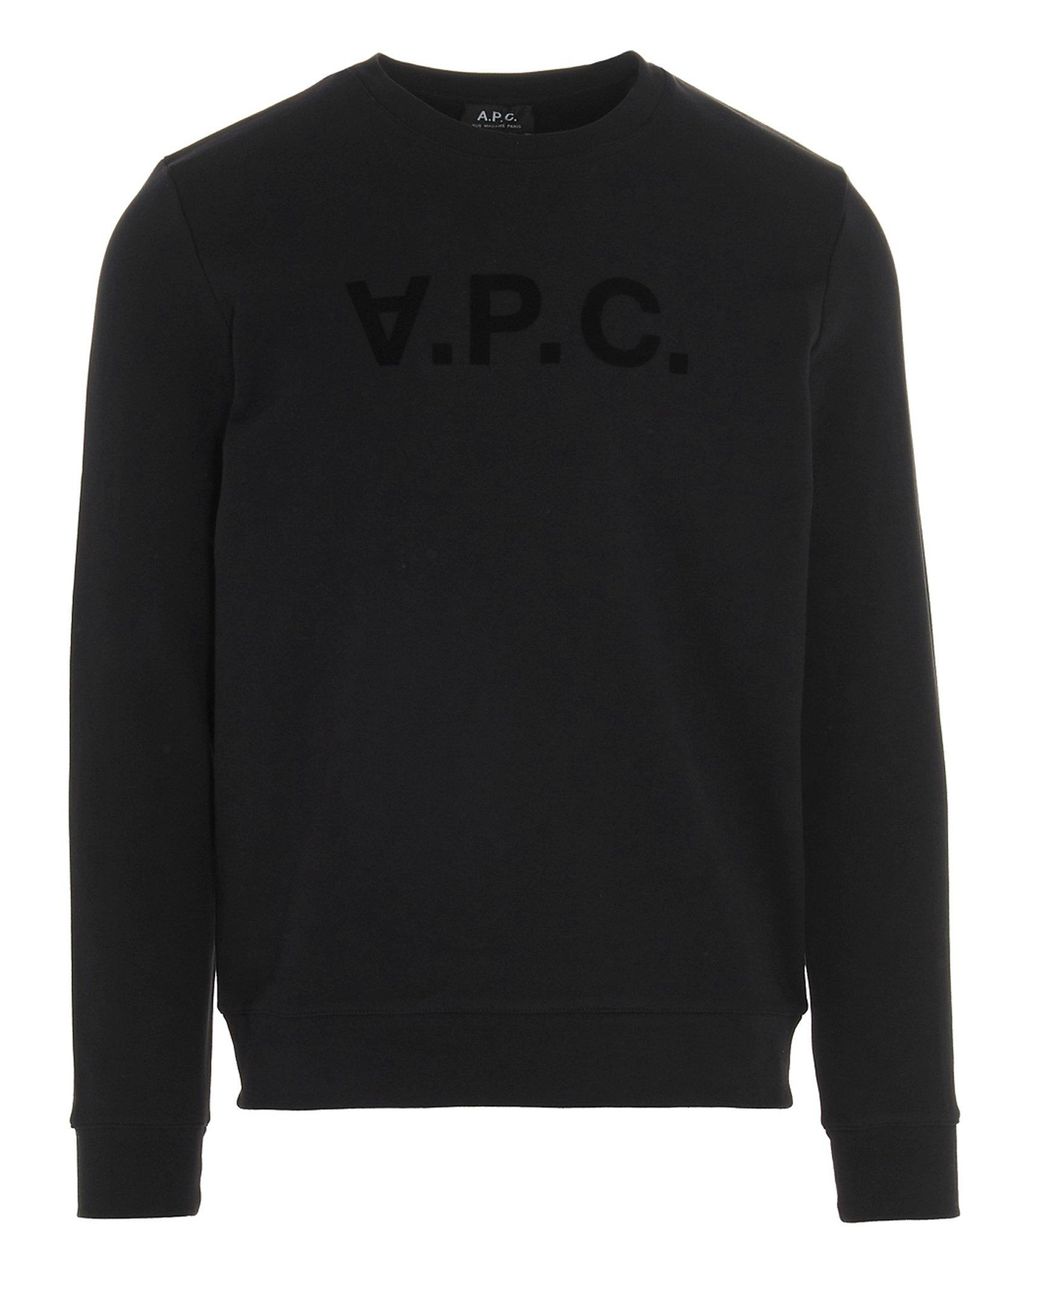 A.P.C. Cotton Vpc Sweatshirt in Black for Men - Lyst